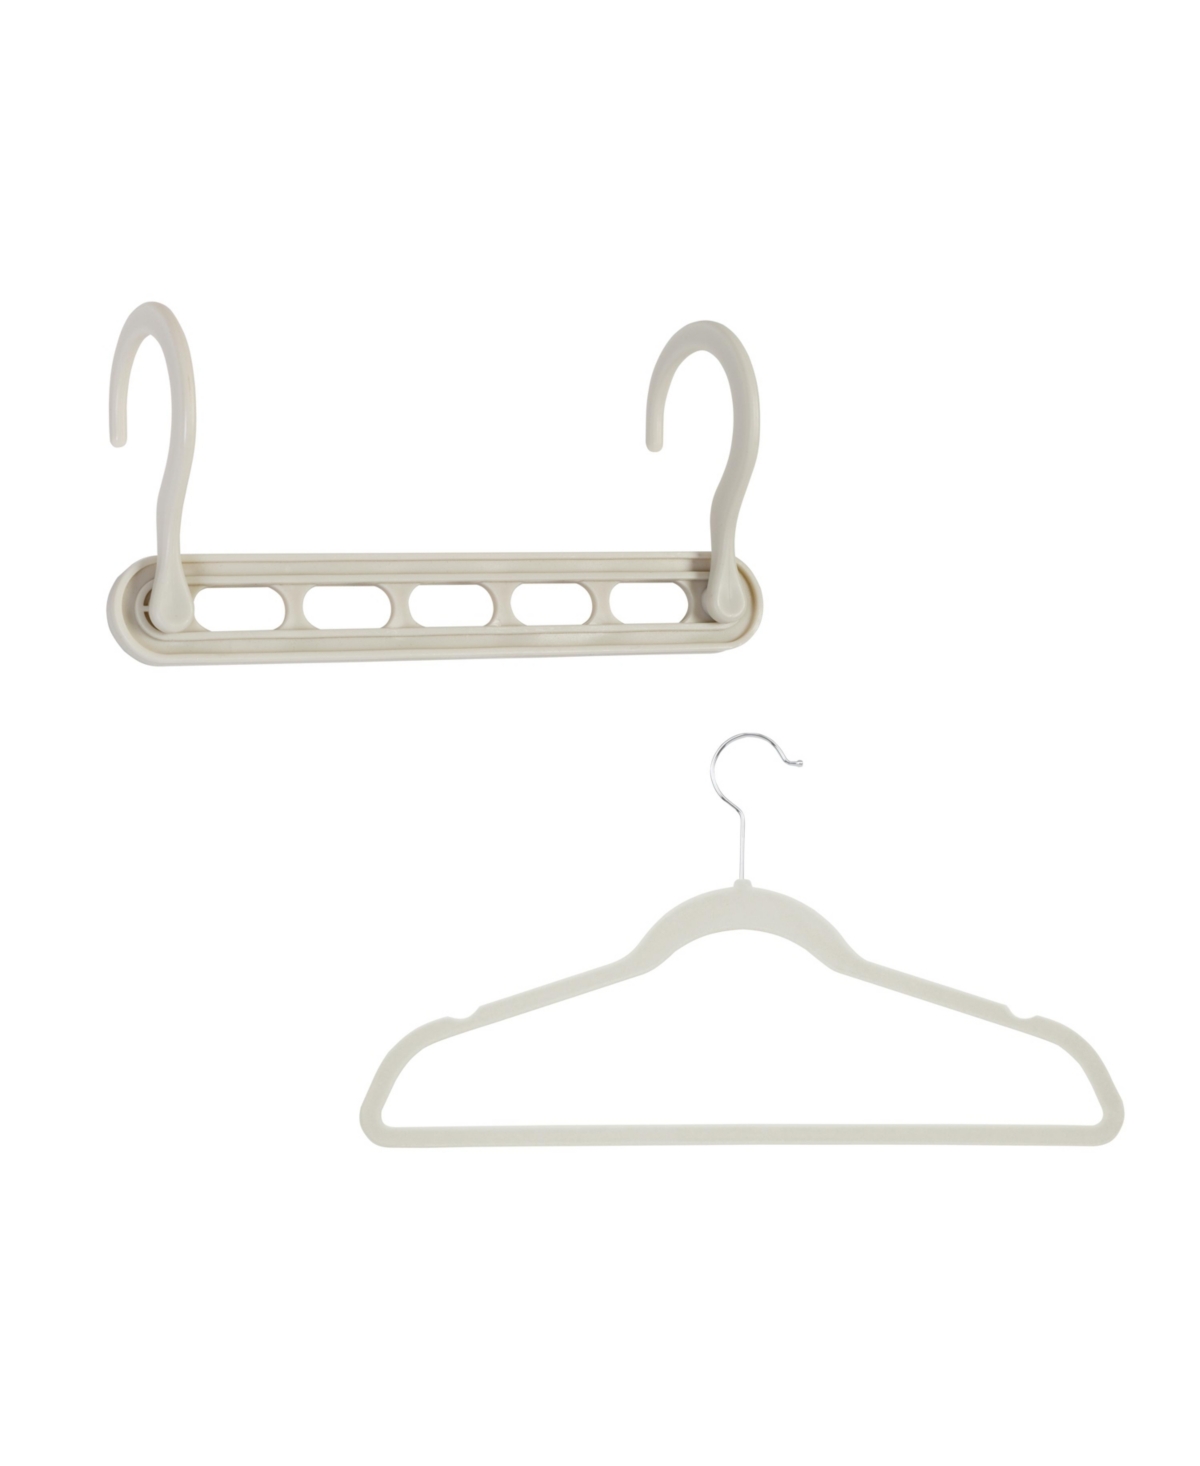 Collapsible Hangers and Velvet Non-Slip Hangers, 55 Piece - White